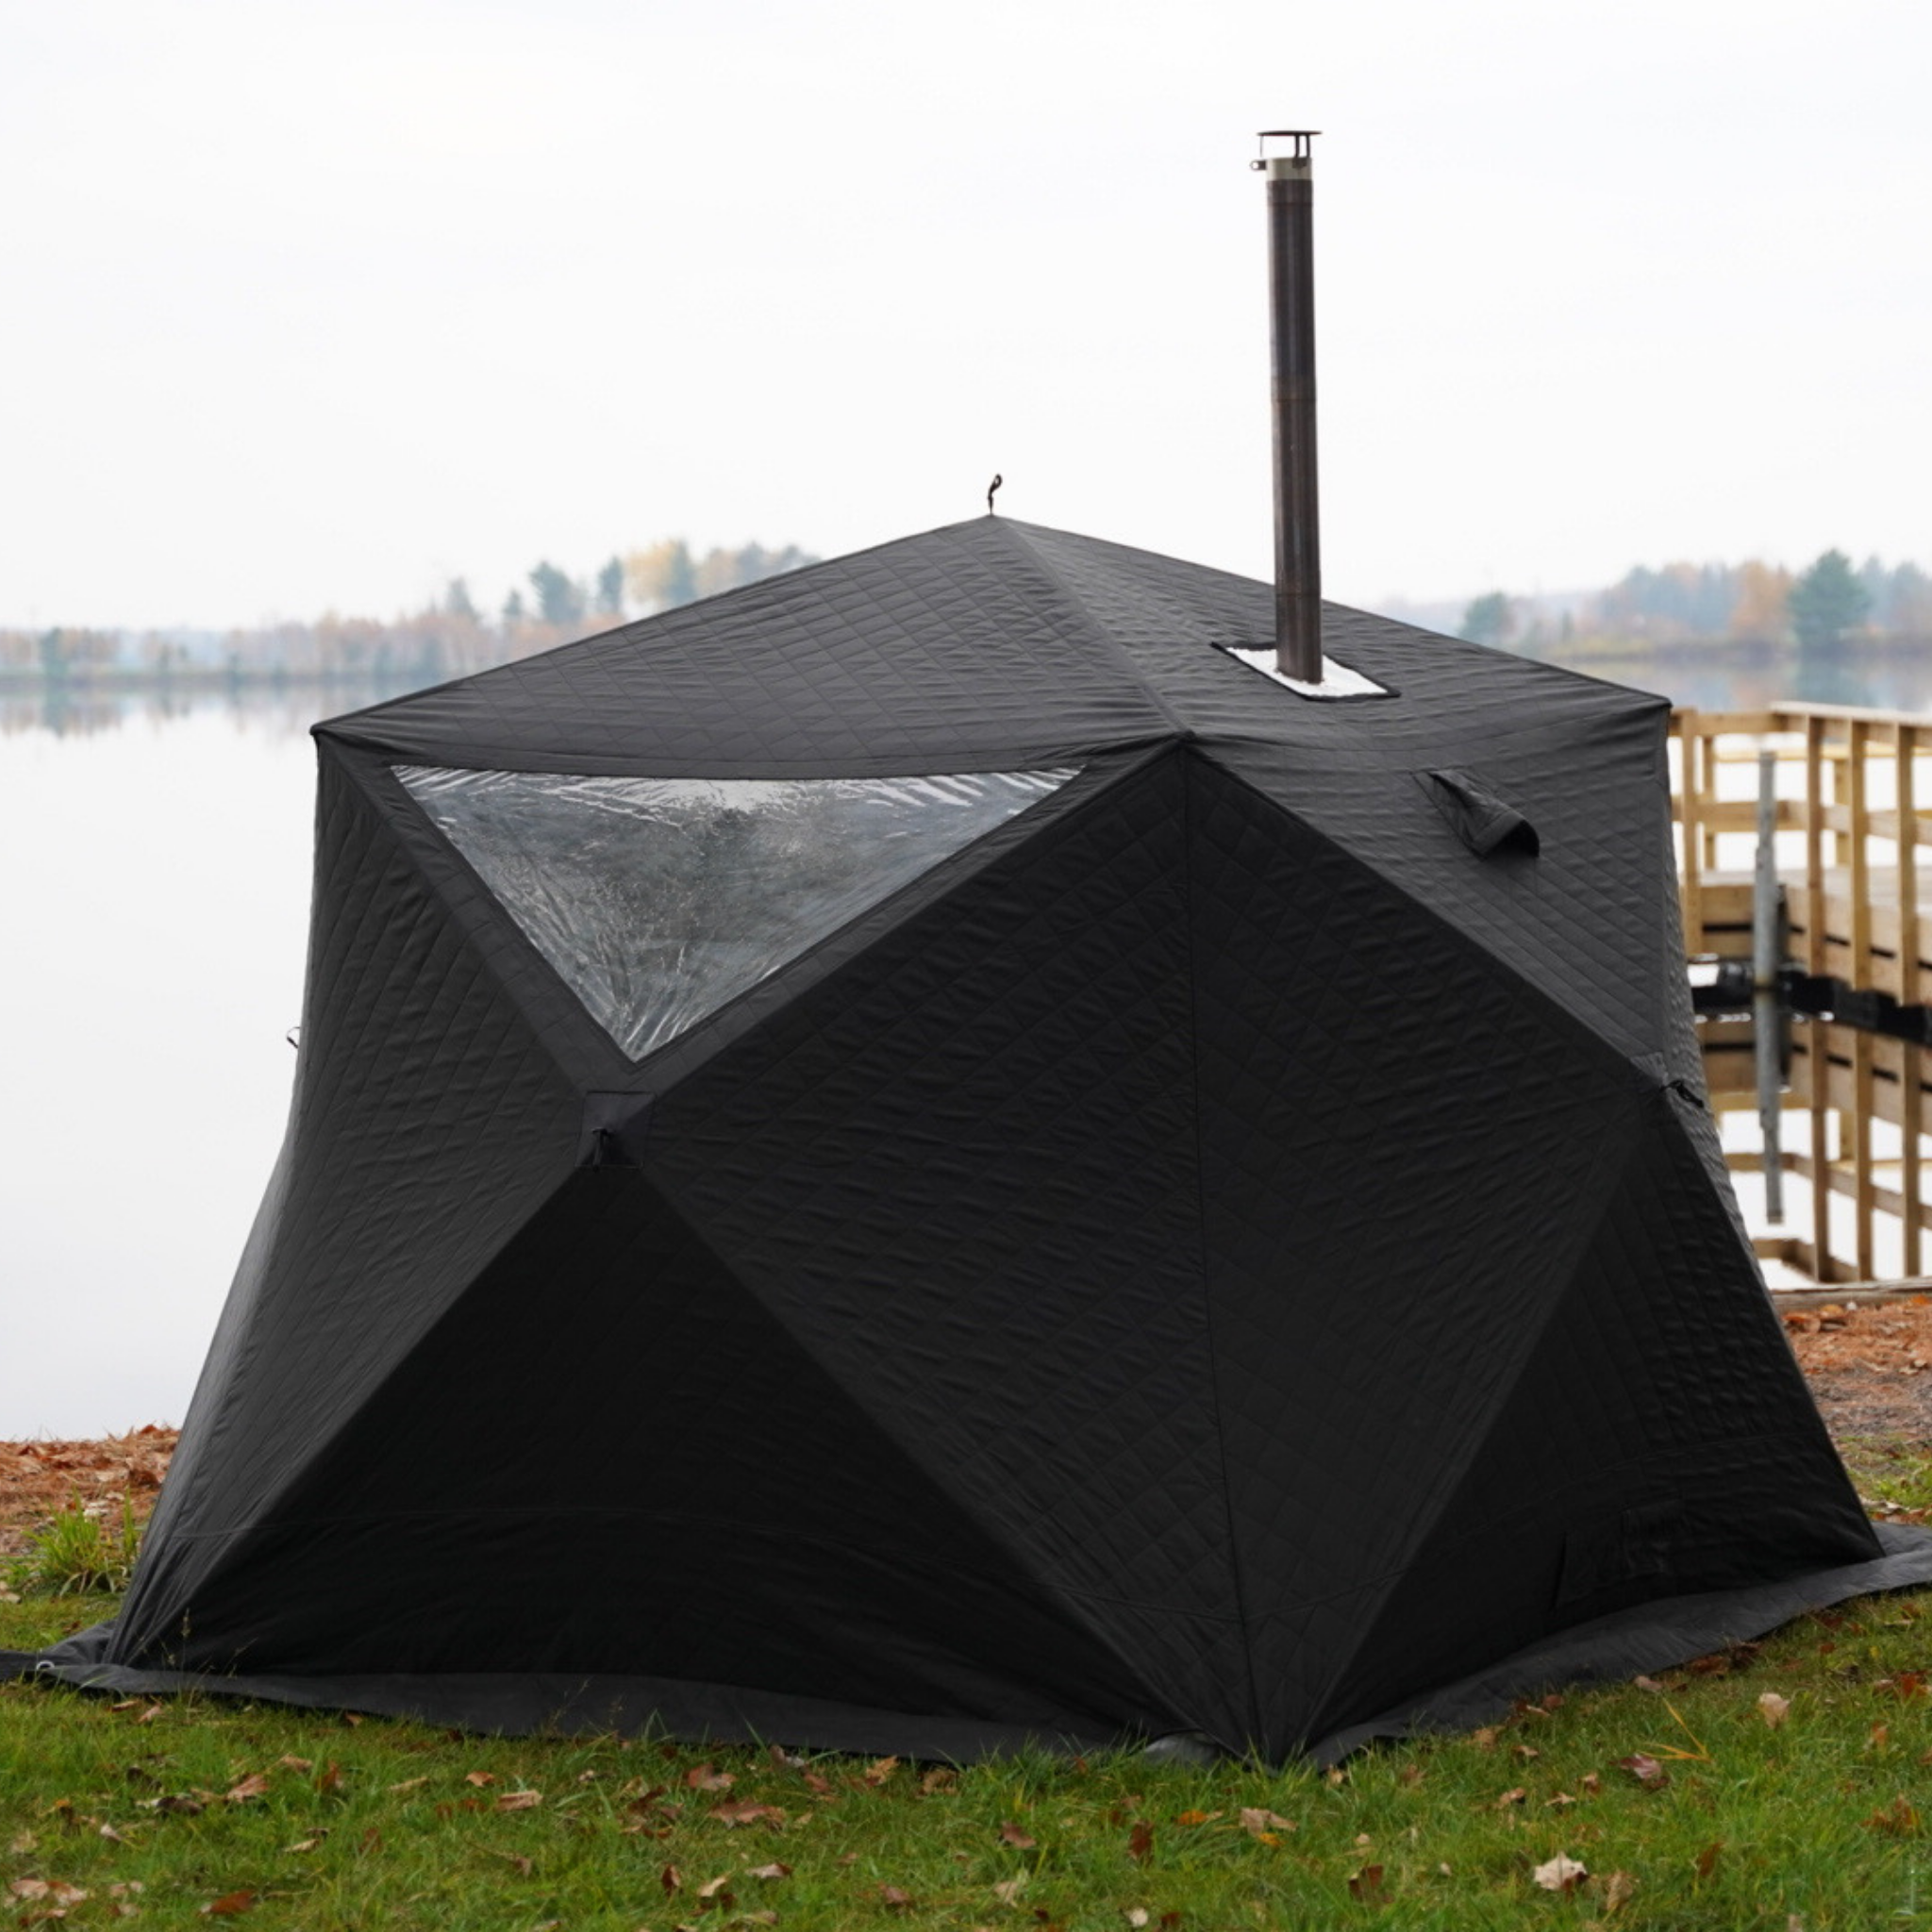 Portable Outdoor Sauna Tent - Nova 6 Tent - 6 People - Tent Only